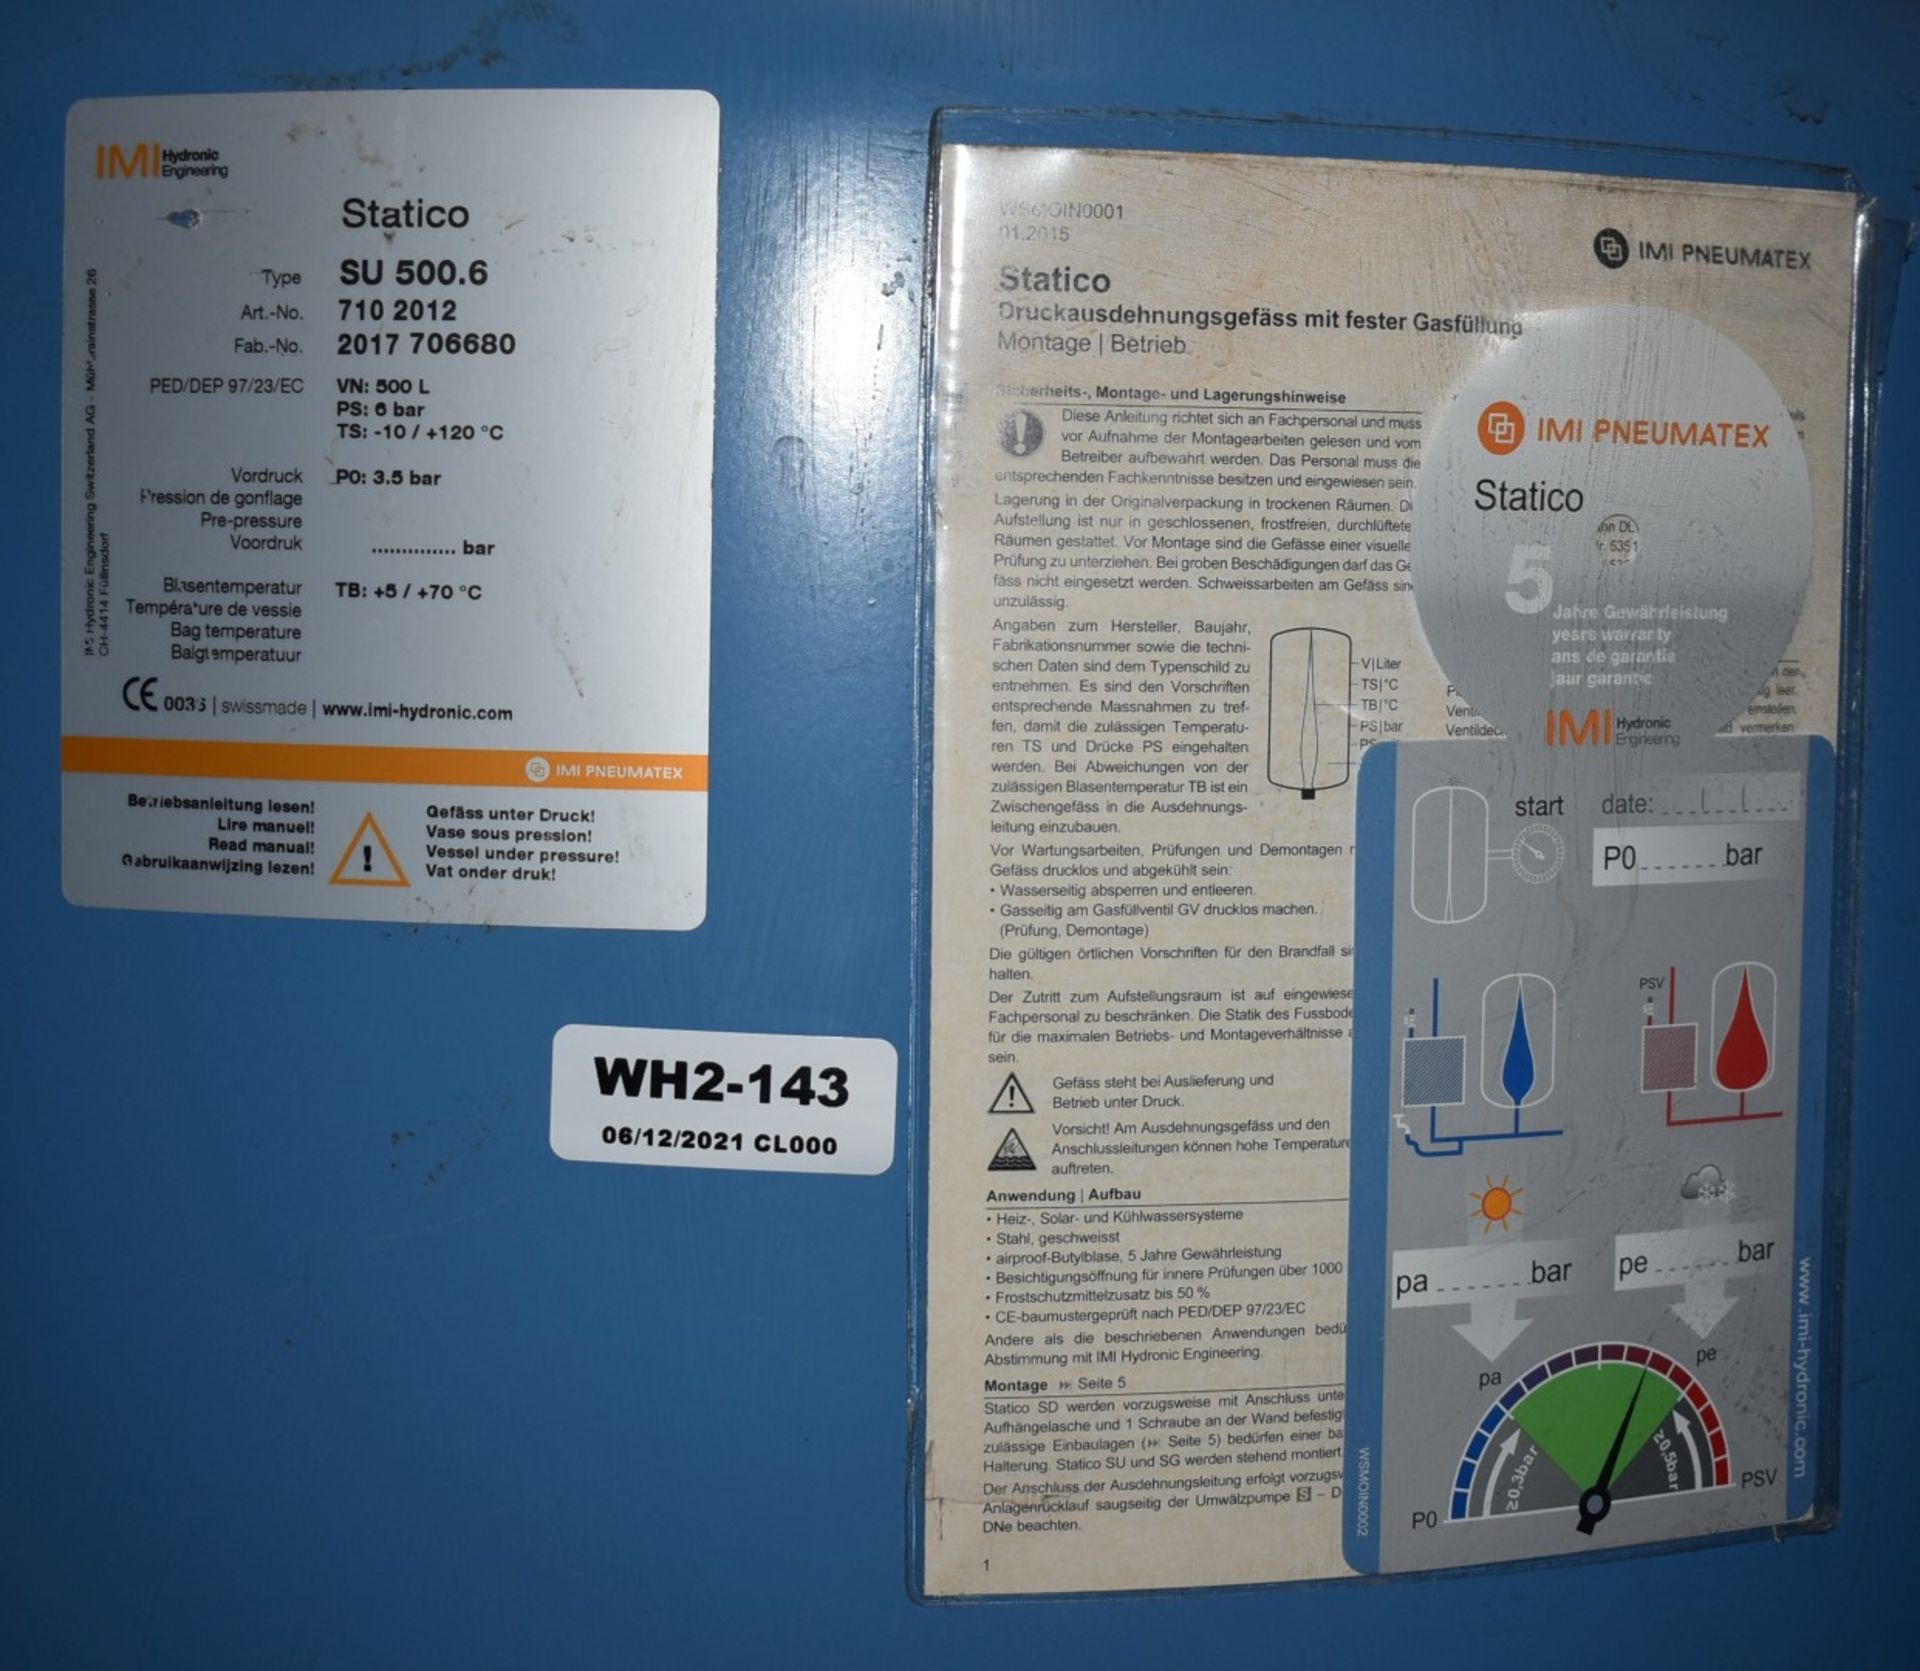 1 x Pneumatex Statico 500L 6 Bar Pressure Expansion Vessel - Product Code: SU 500.6 - RRP £1,678 - Image 3 of 7